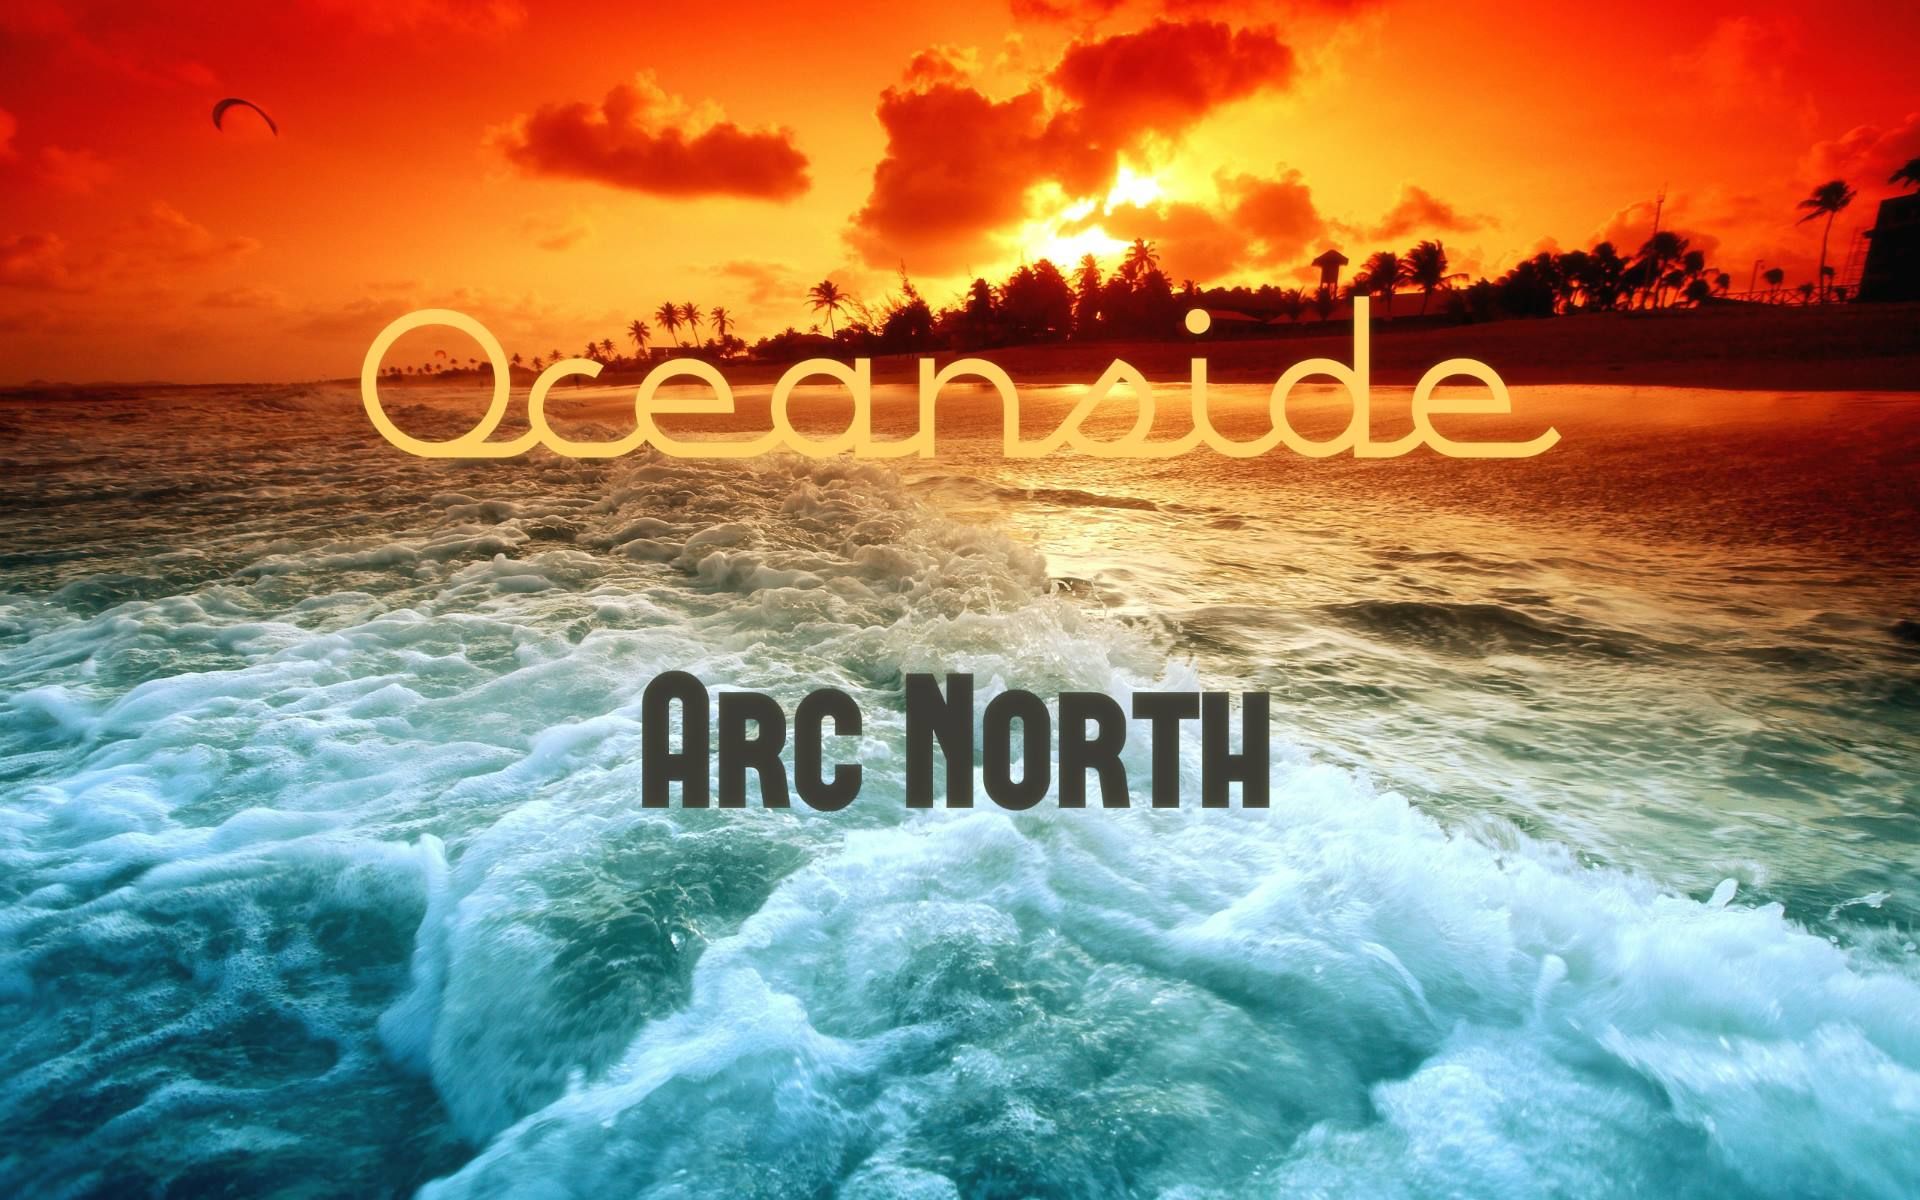 Arc North - Oceanside [경쾌, 맑음, 일렉]